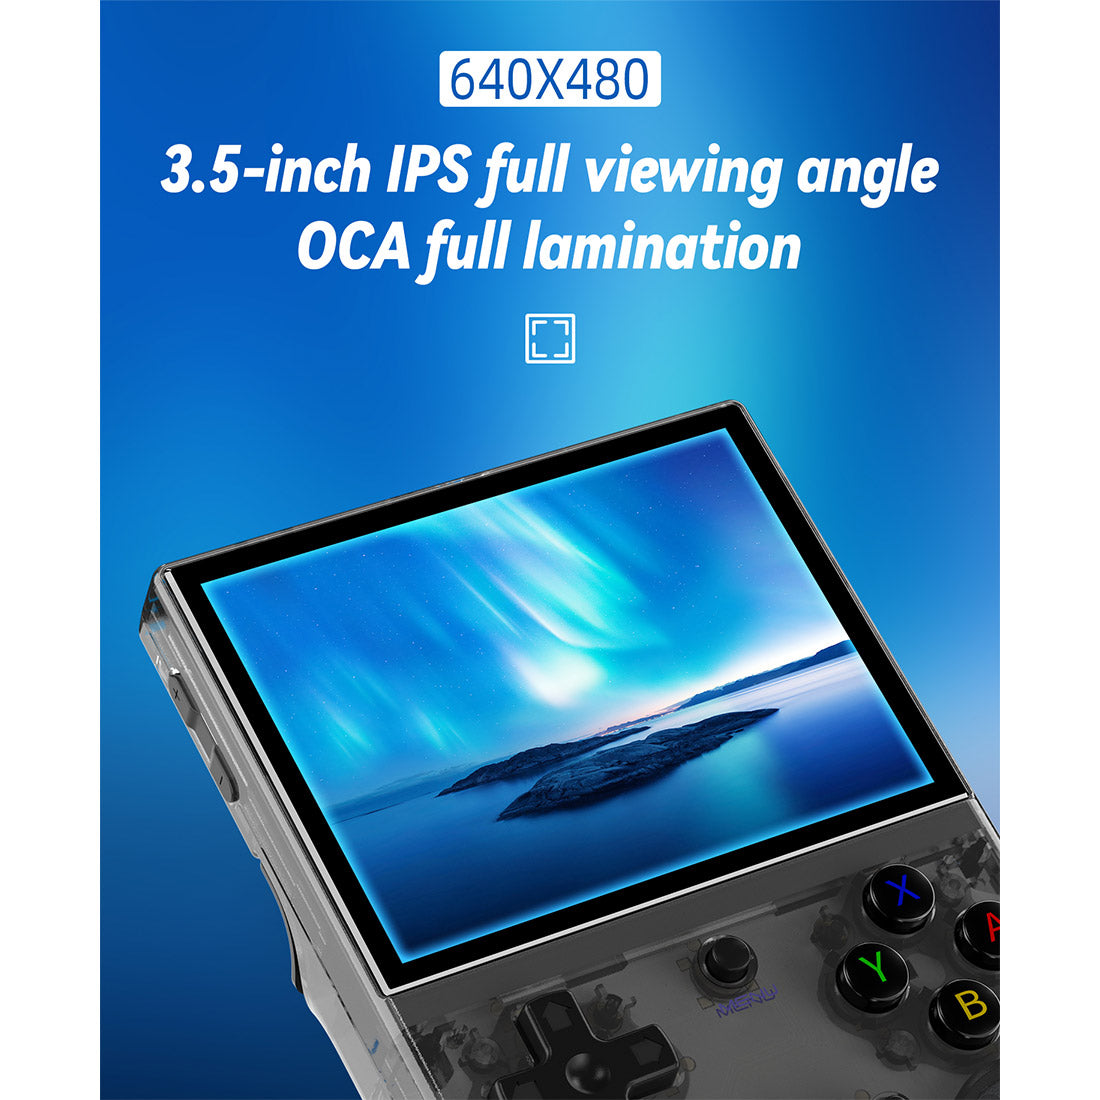 ANBERNIC RG35XX Plus Retro Handheld Gaming Console - Mechdiy